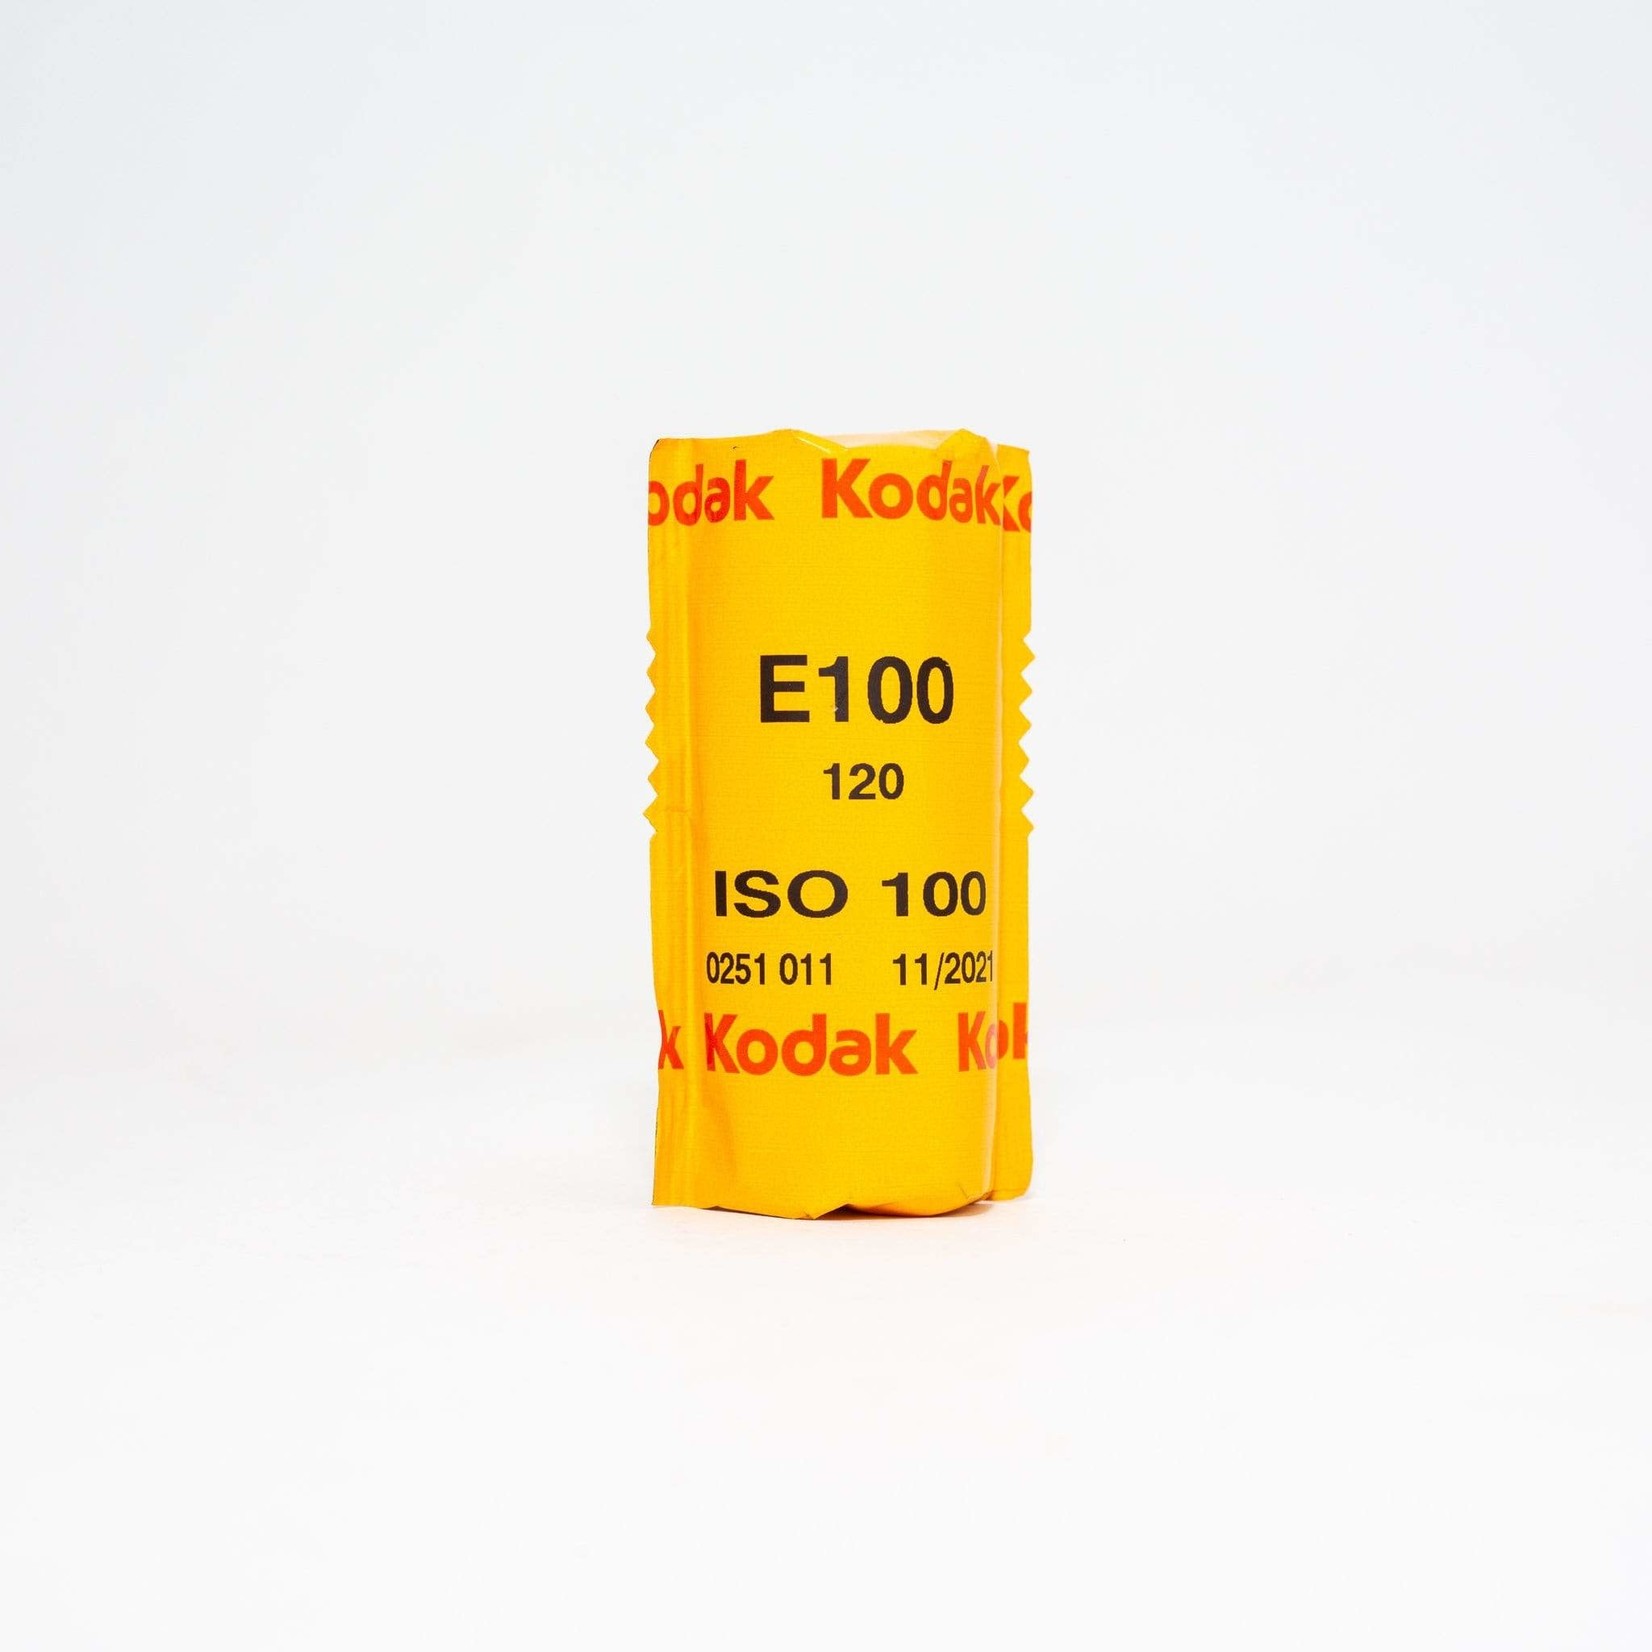 Kodak Kodak Professional Ektachrome E100 Color Transparency Film 120 Roll Film